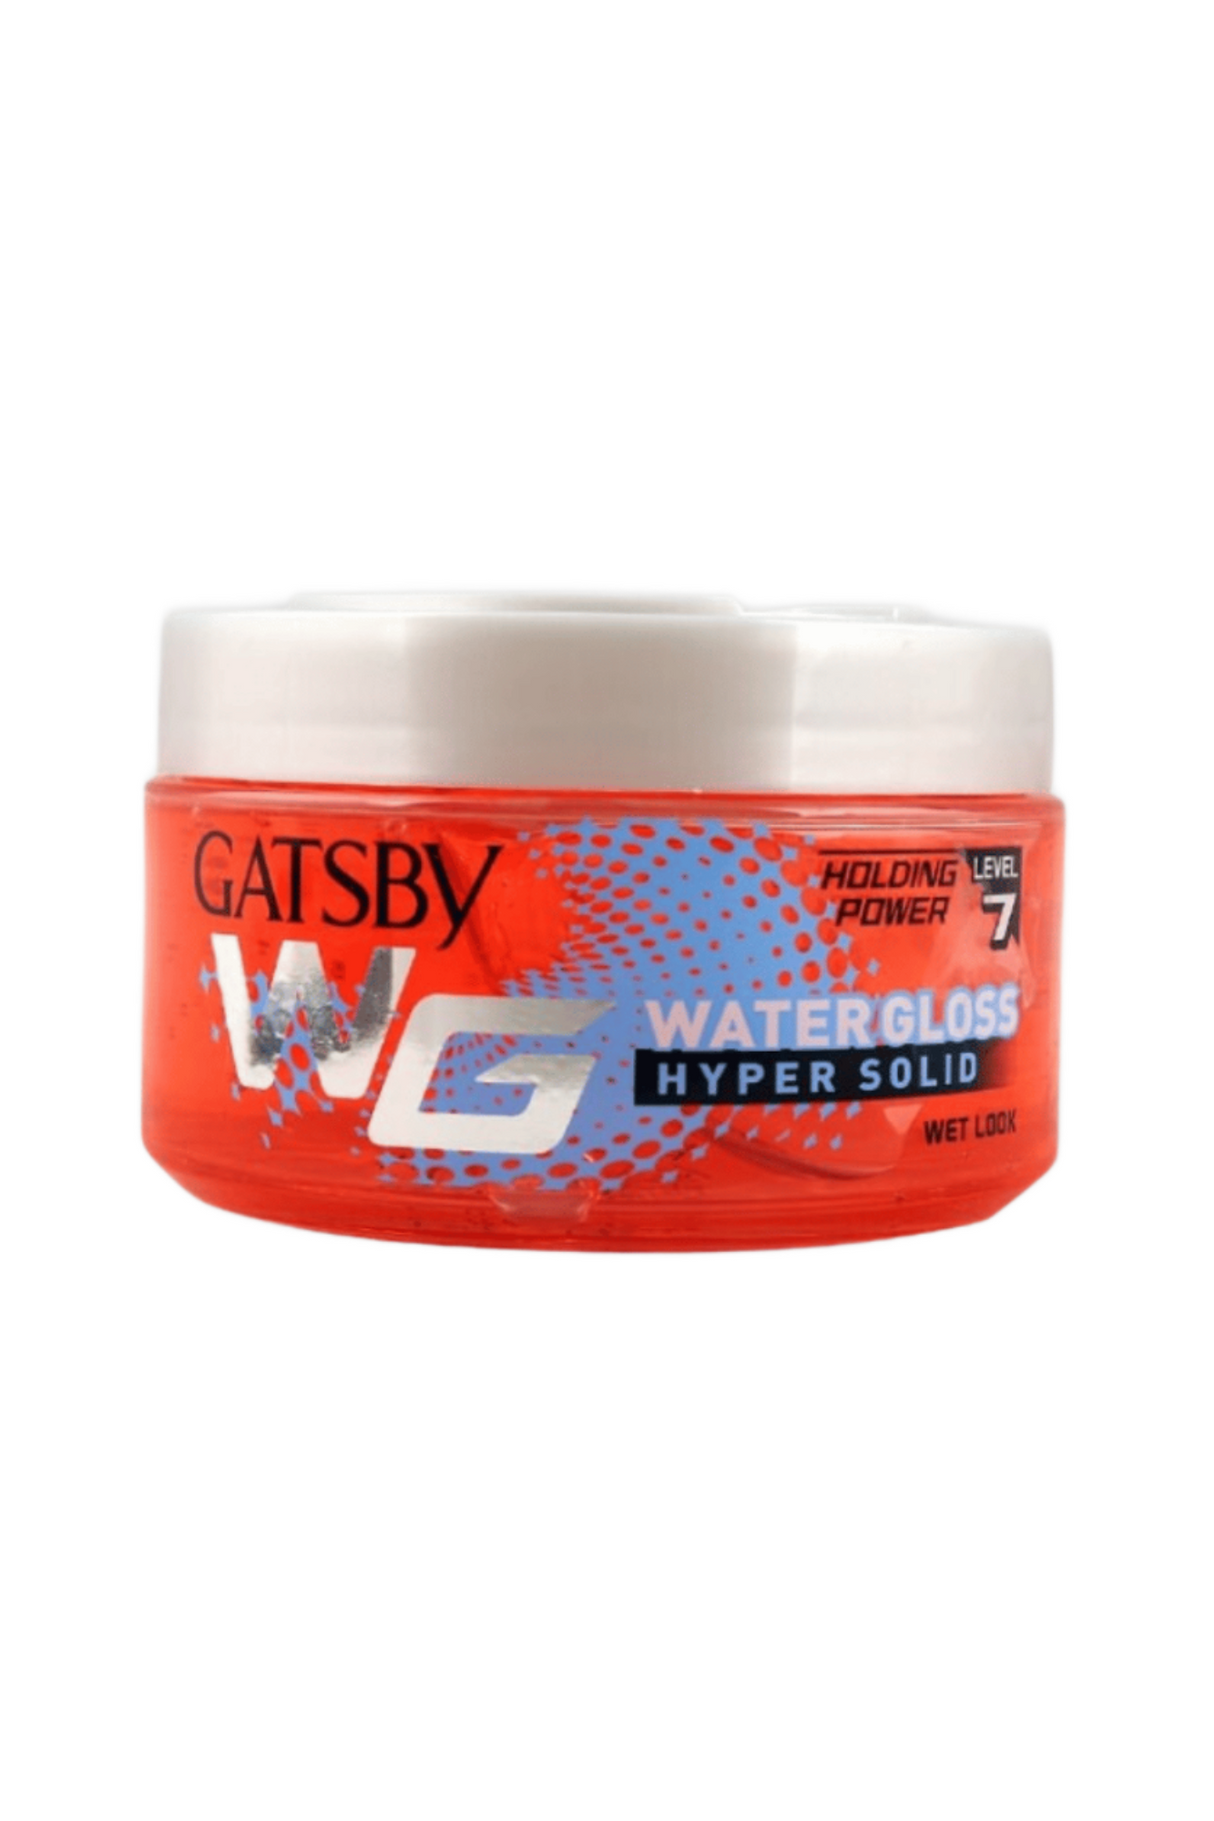 gatsby hair gel jar water gloss hyper solid 150g